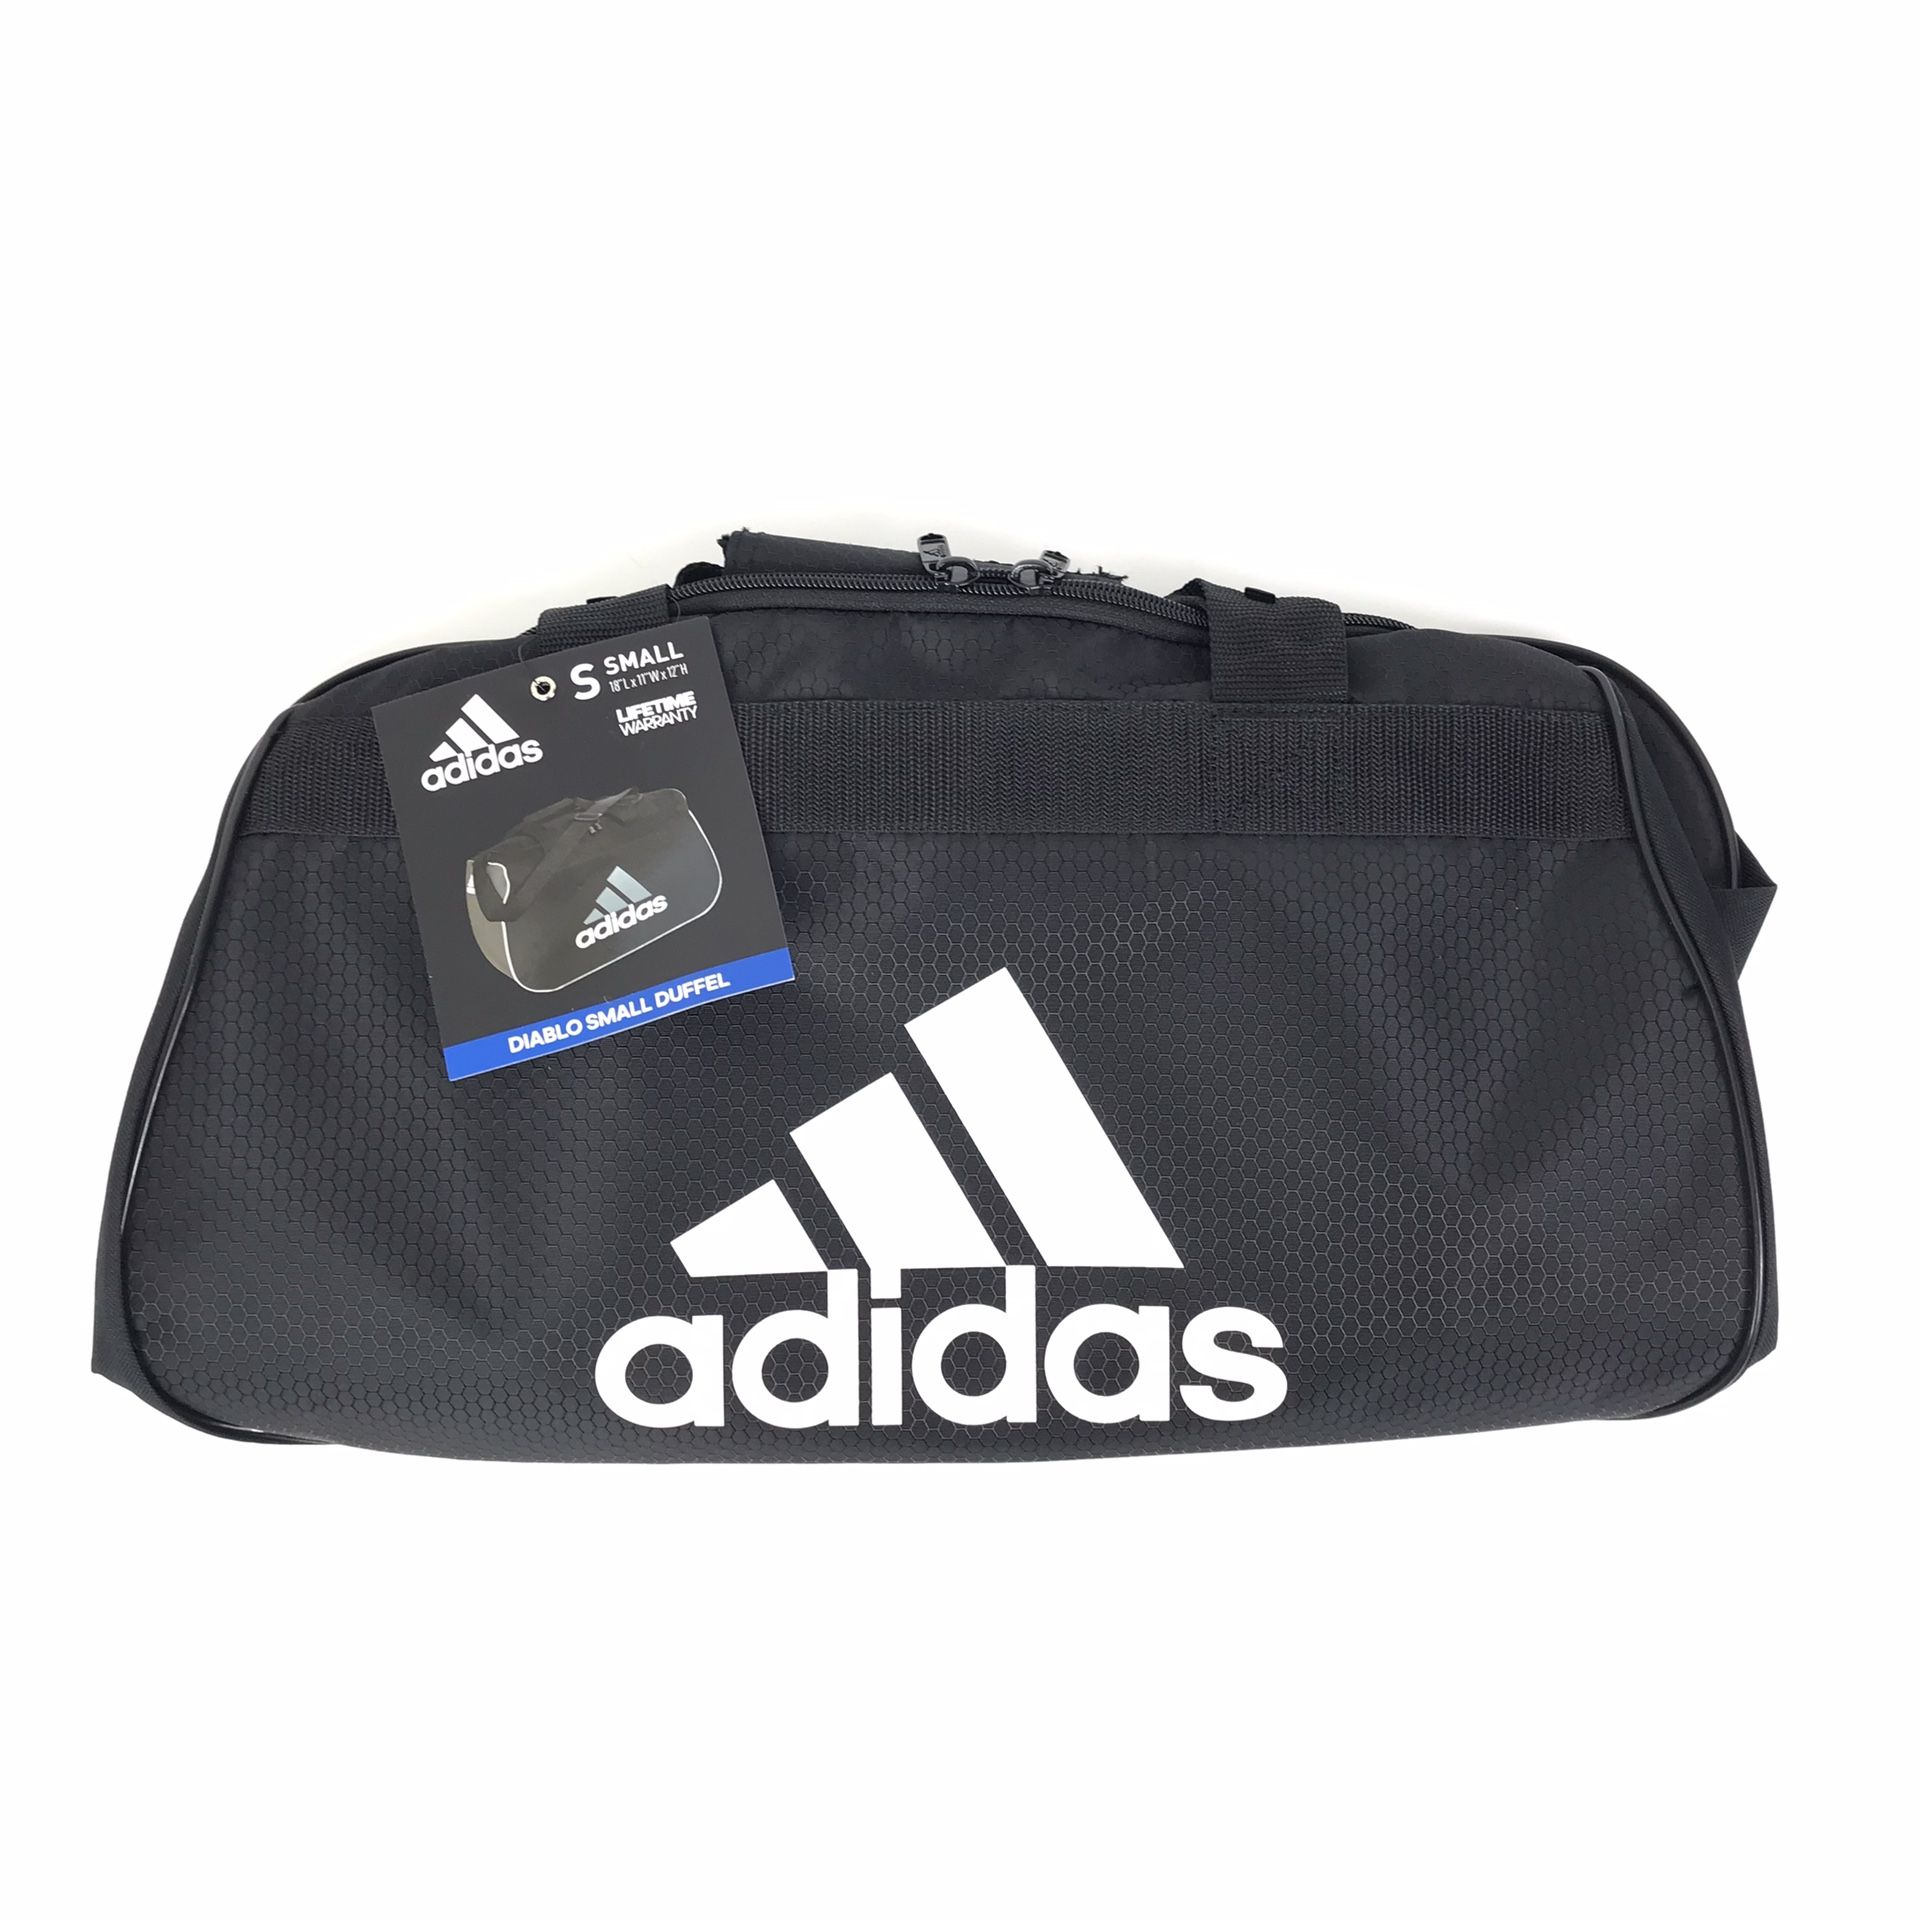 Adidas Diablo Small II Hex Solid Duffel Bag Gym Classic Black/White 141213C